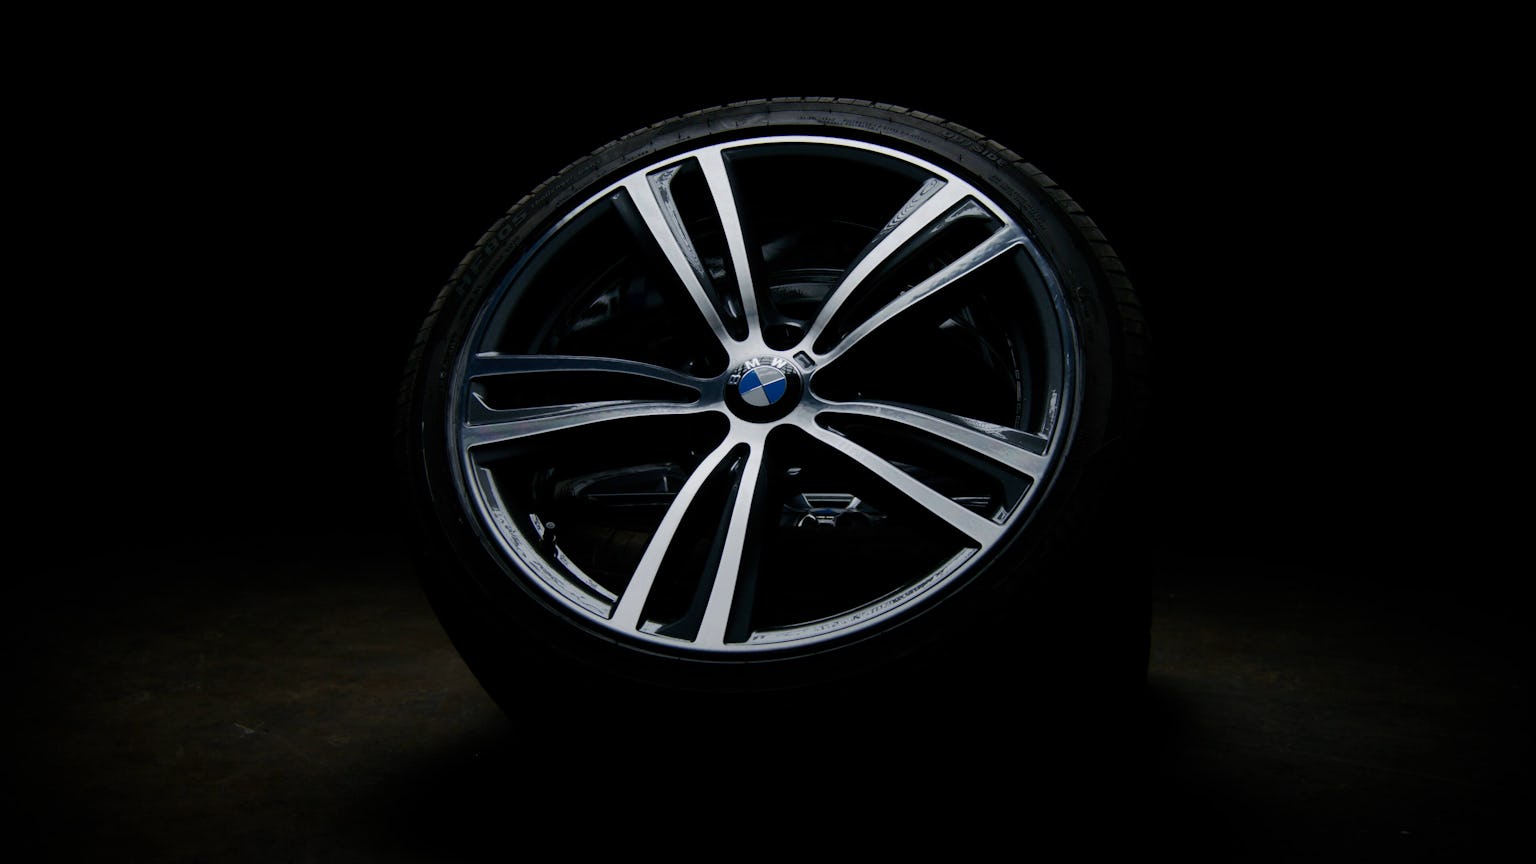 Refurnished BMW alloy wheel in gun metal gray with a diamond cut finish